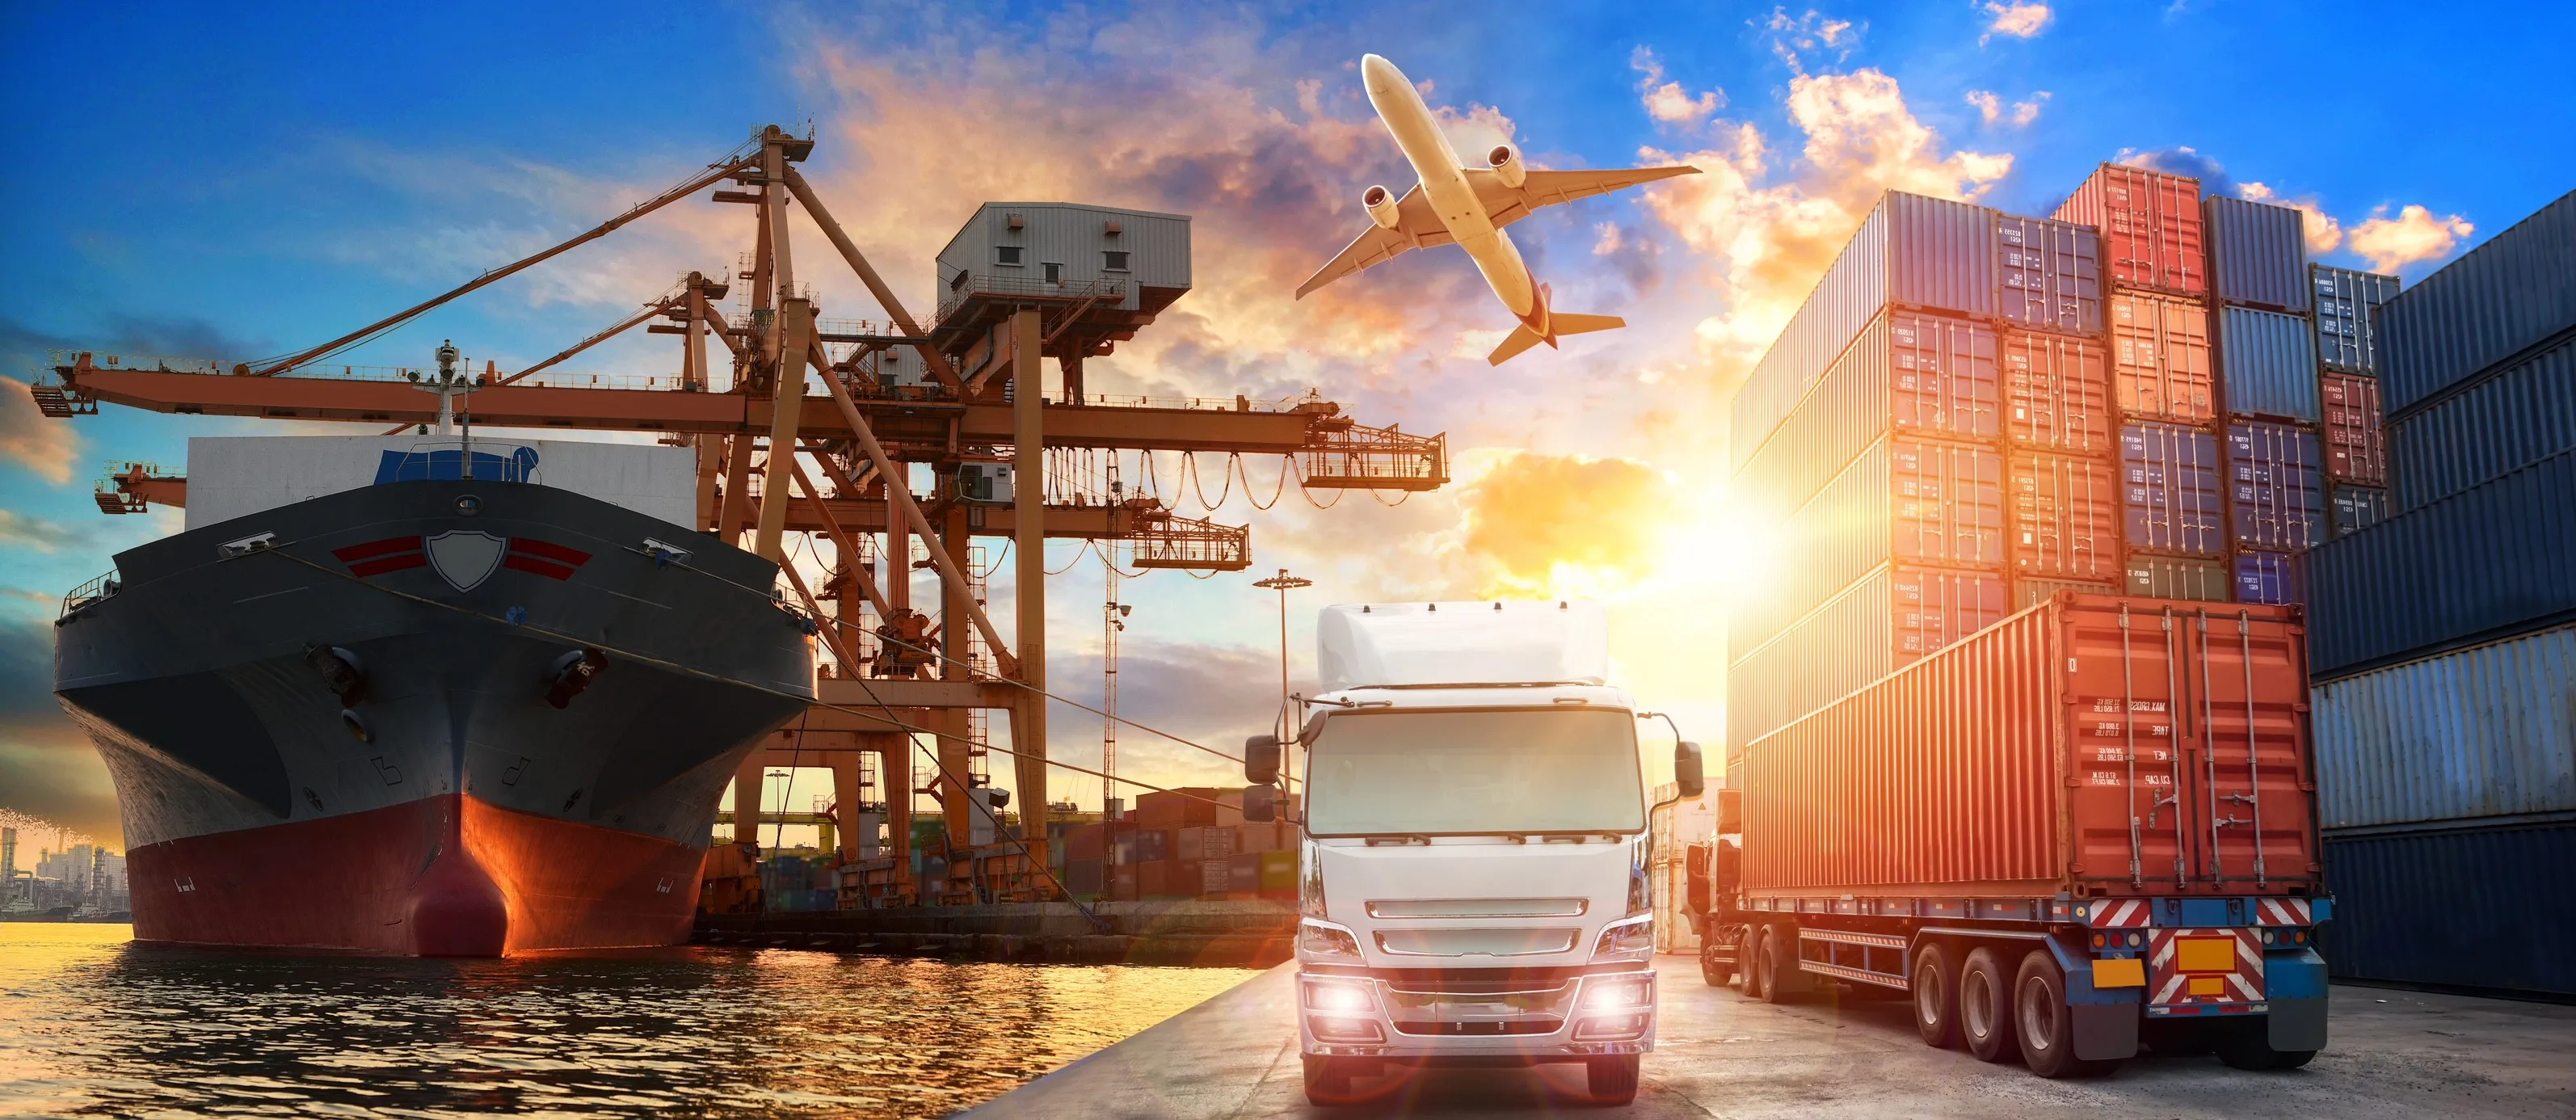 Cargo transportation. Транспорт логистика. Перевозка грузов. Транспортные перевозки. Транспорт для перевозки грузов.